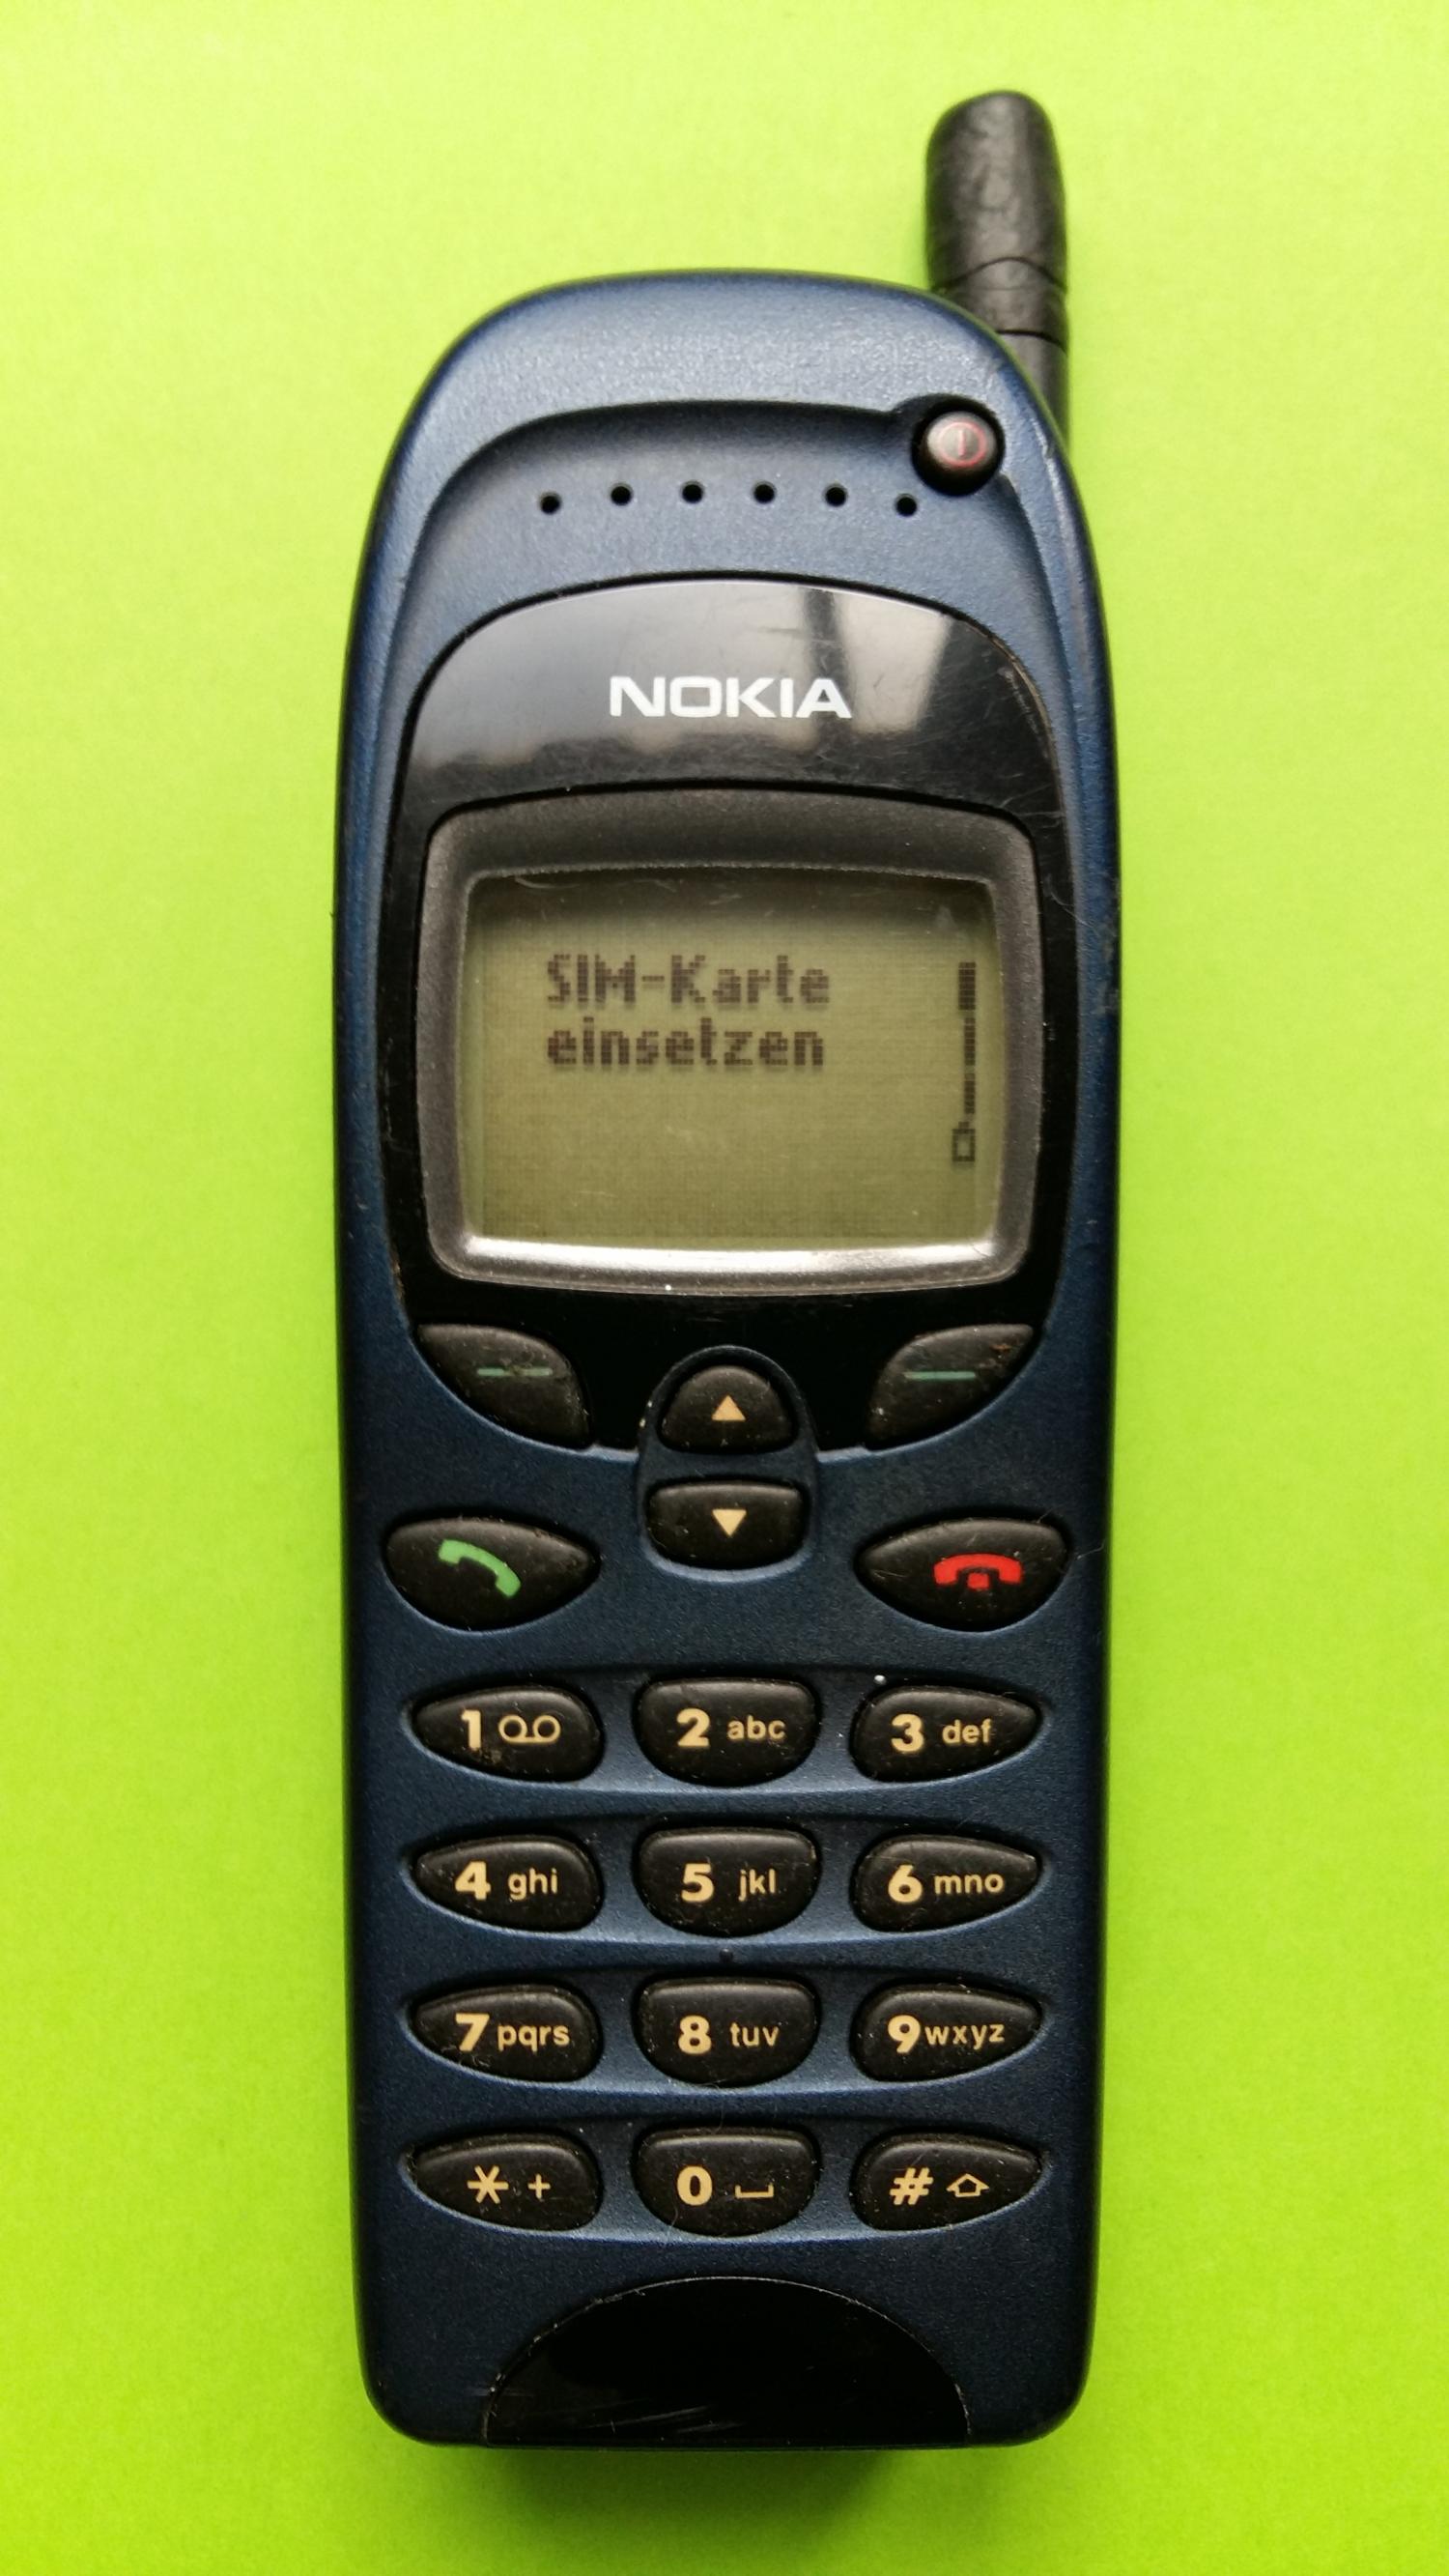 image-7303853-Nokia 6150 Sat (2)1.jpg